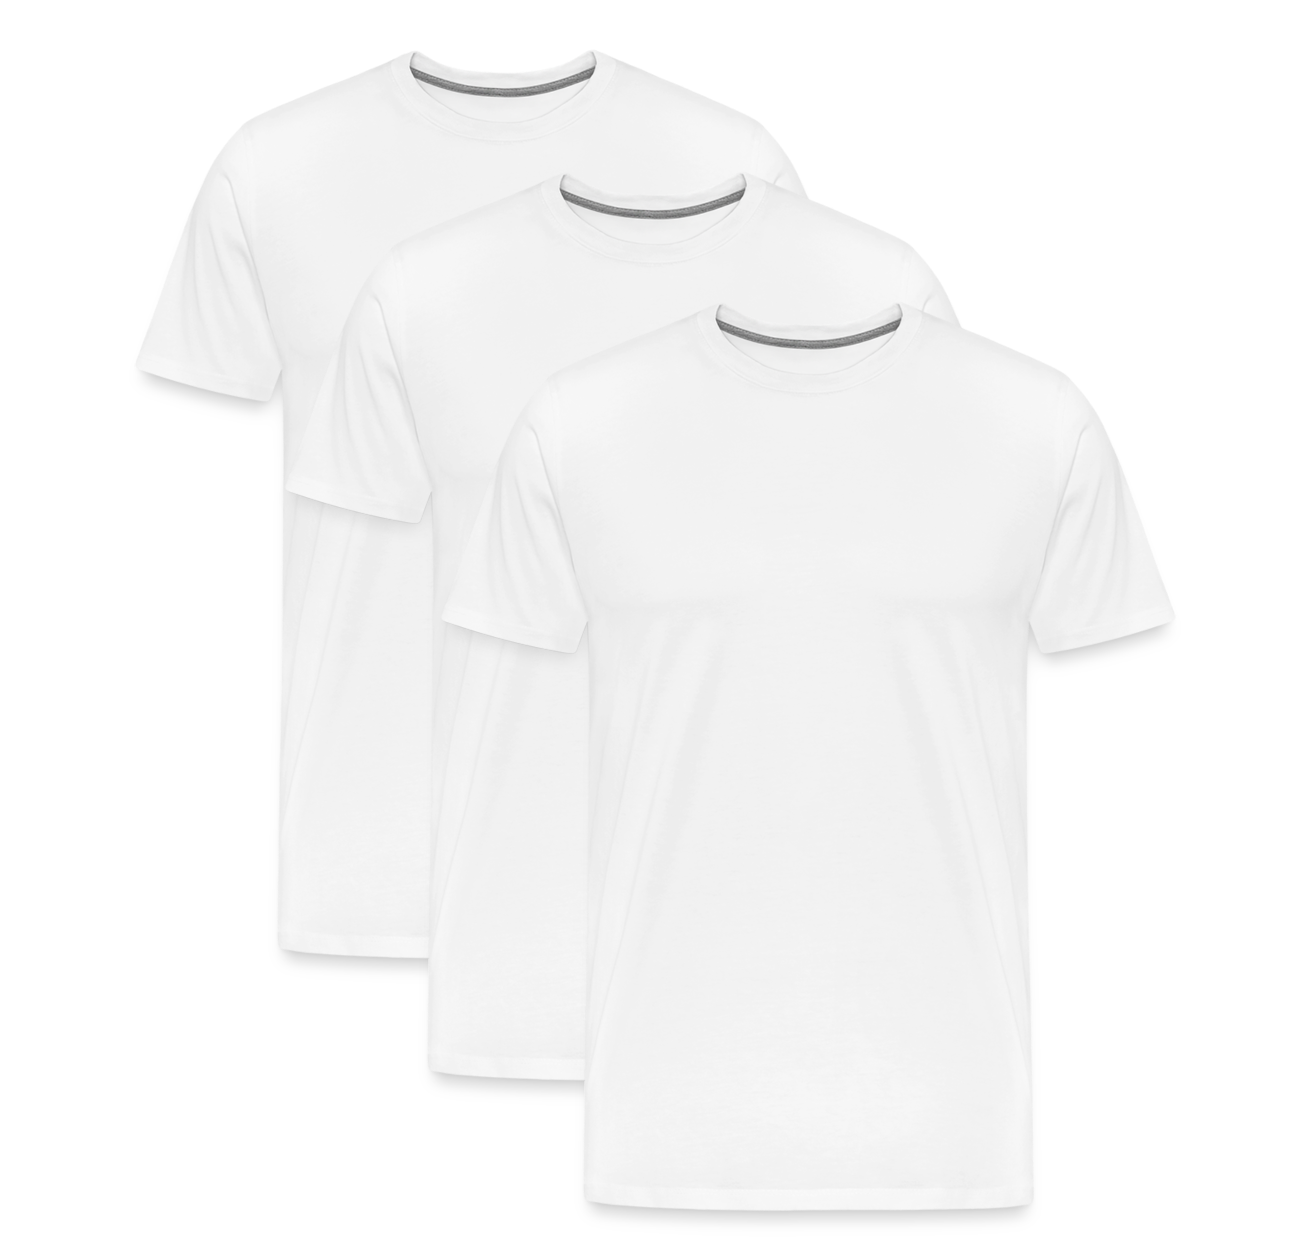 Fluent Tee Variety 3-Pack (Size XL) - Men's Premium T-Shirt from fluentclothing.com